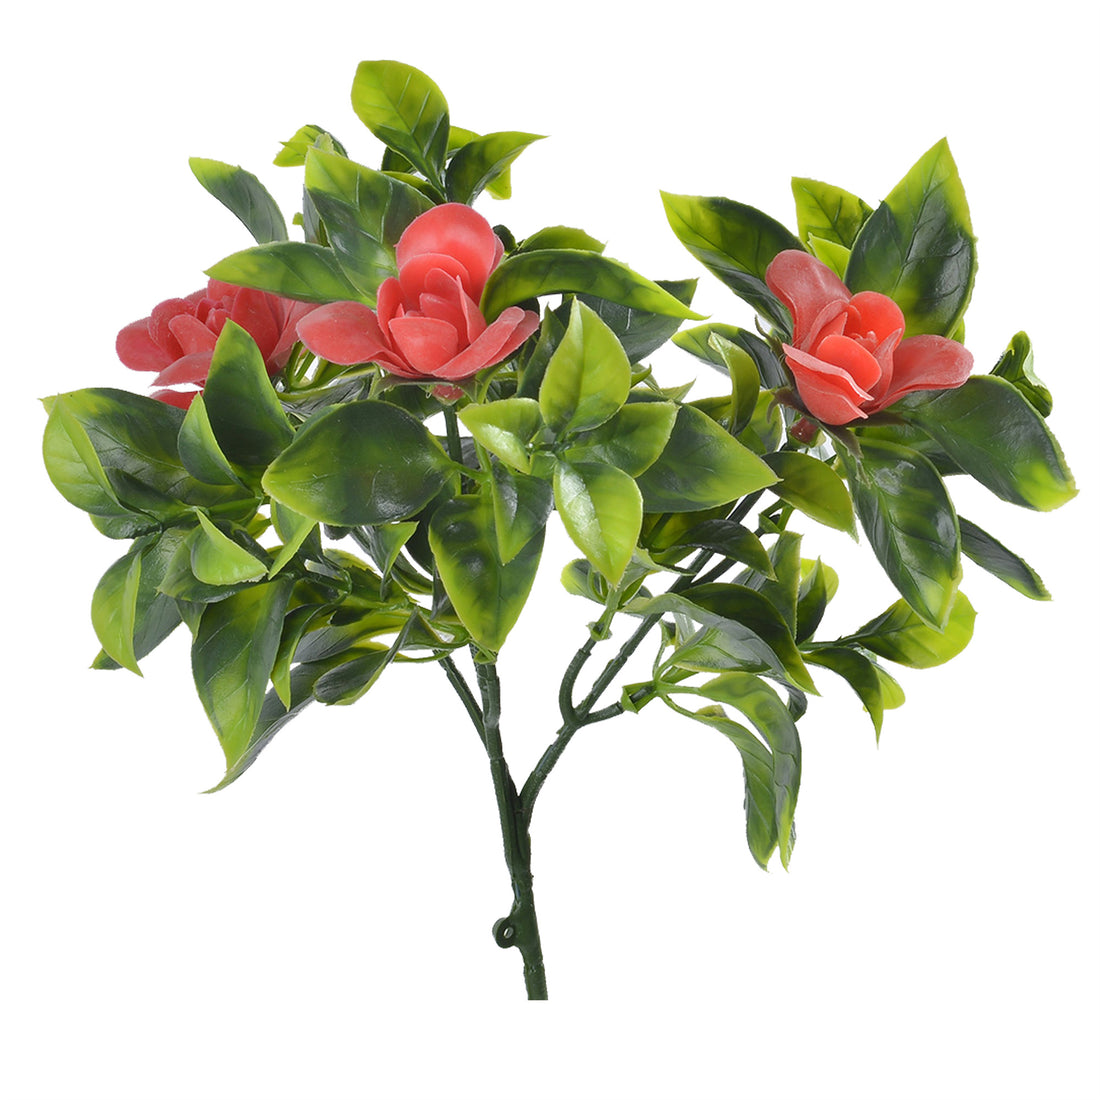 Gardenia roja, rama decorativa artificial de 30 cm con protección UV